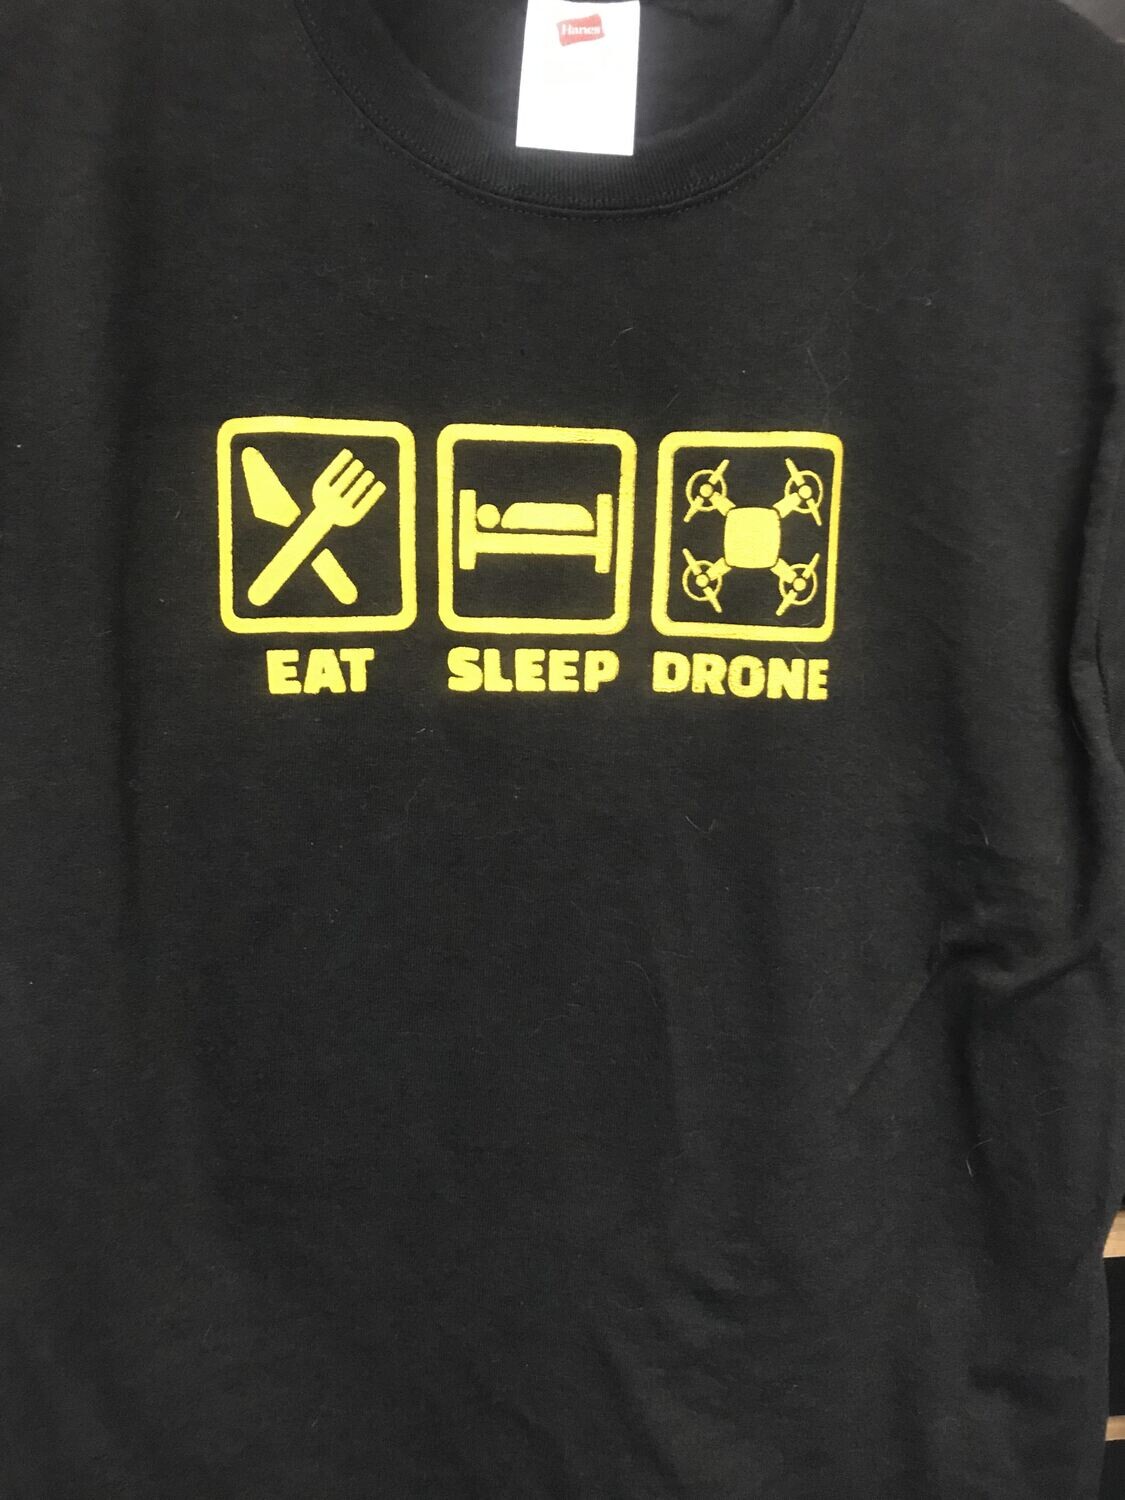 Eat,Sleep,Drone t shirt